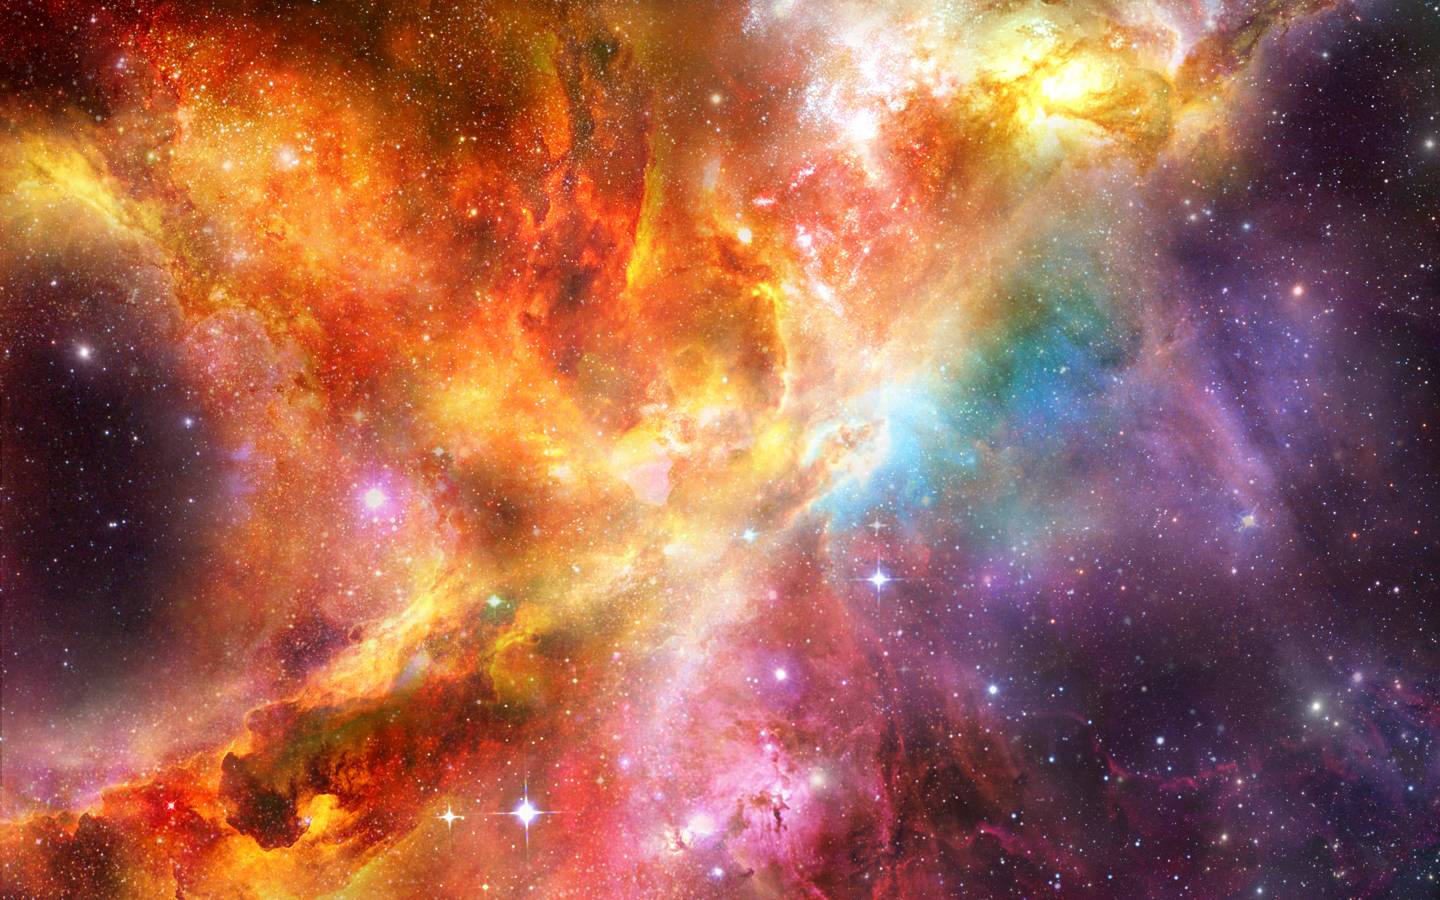 Galaxy Supernova Explosion Hd Download : Wallpapers13.com